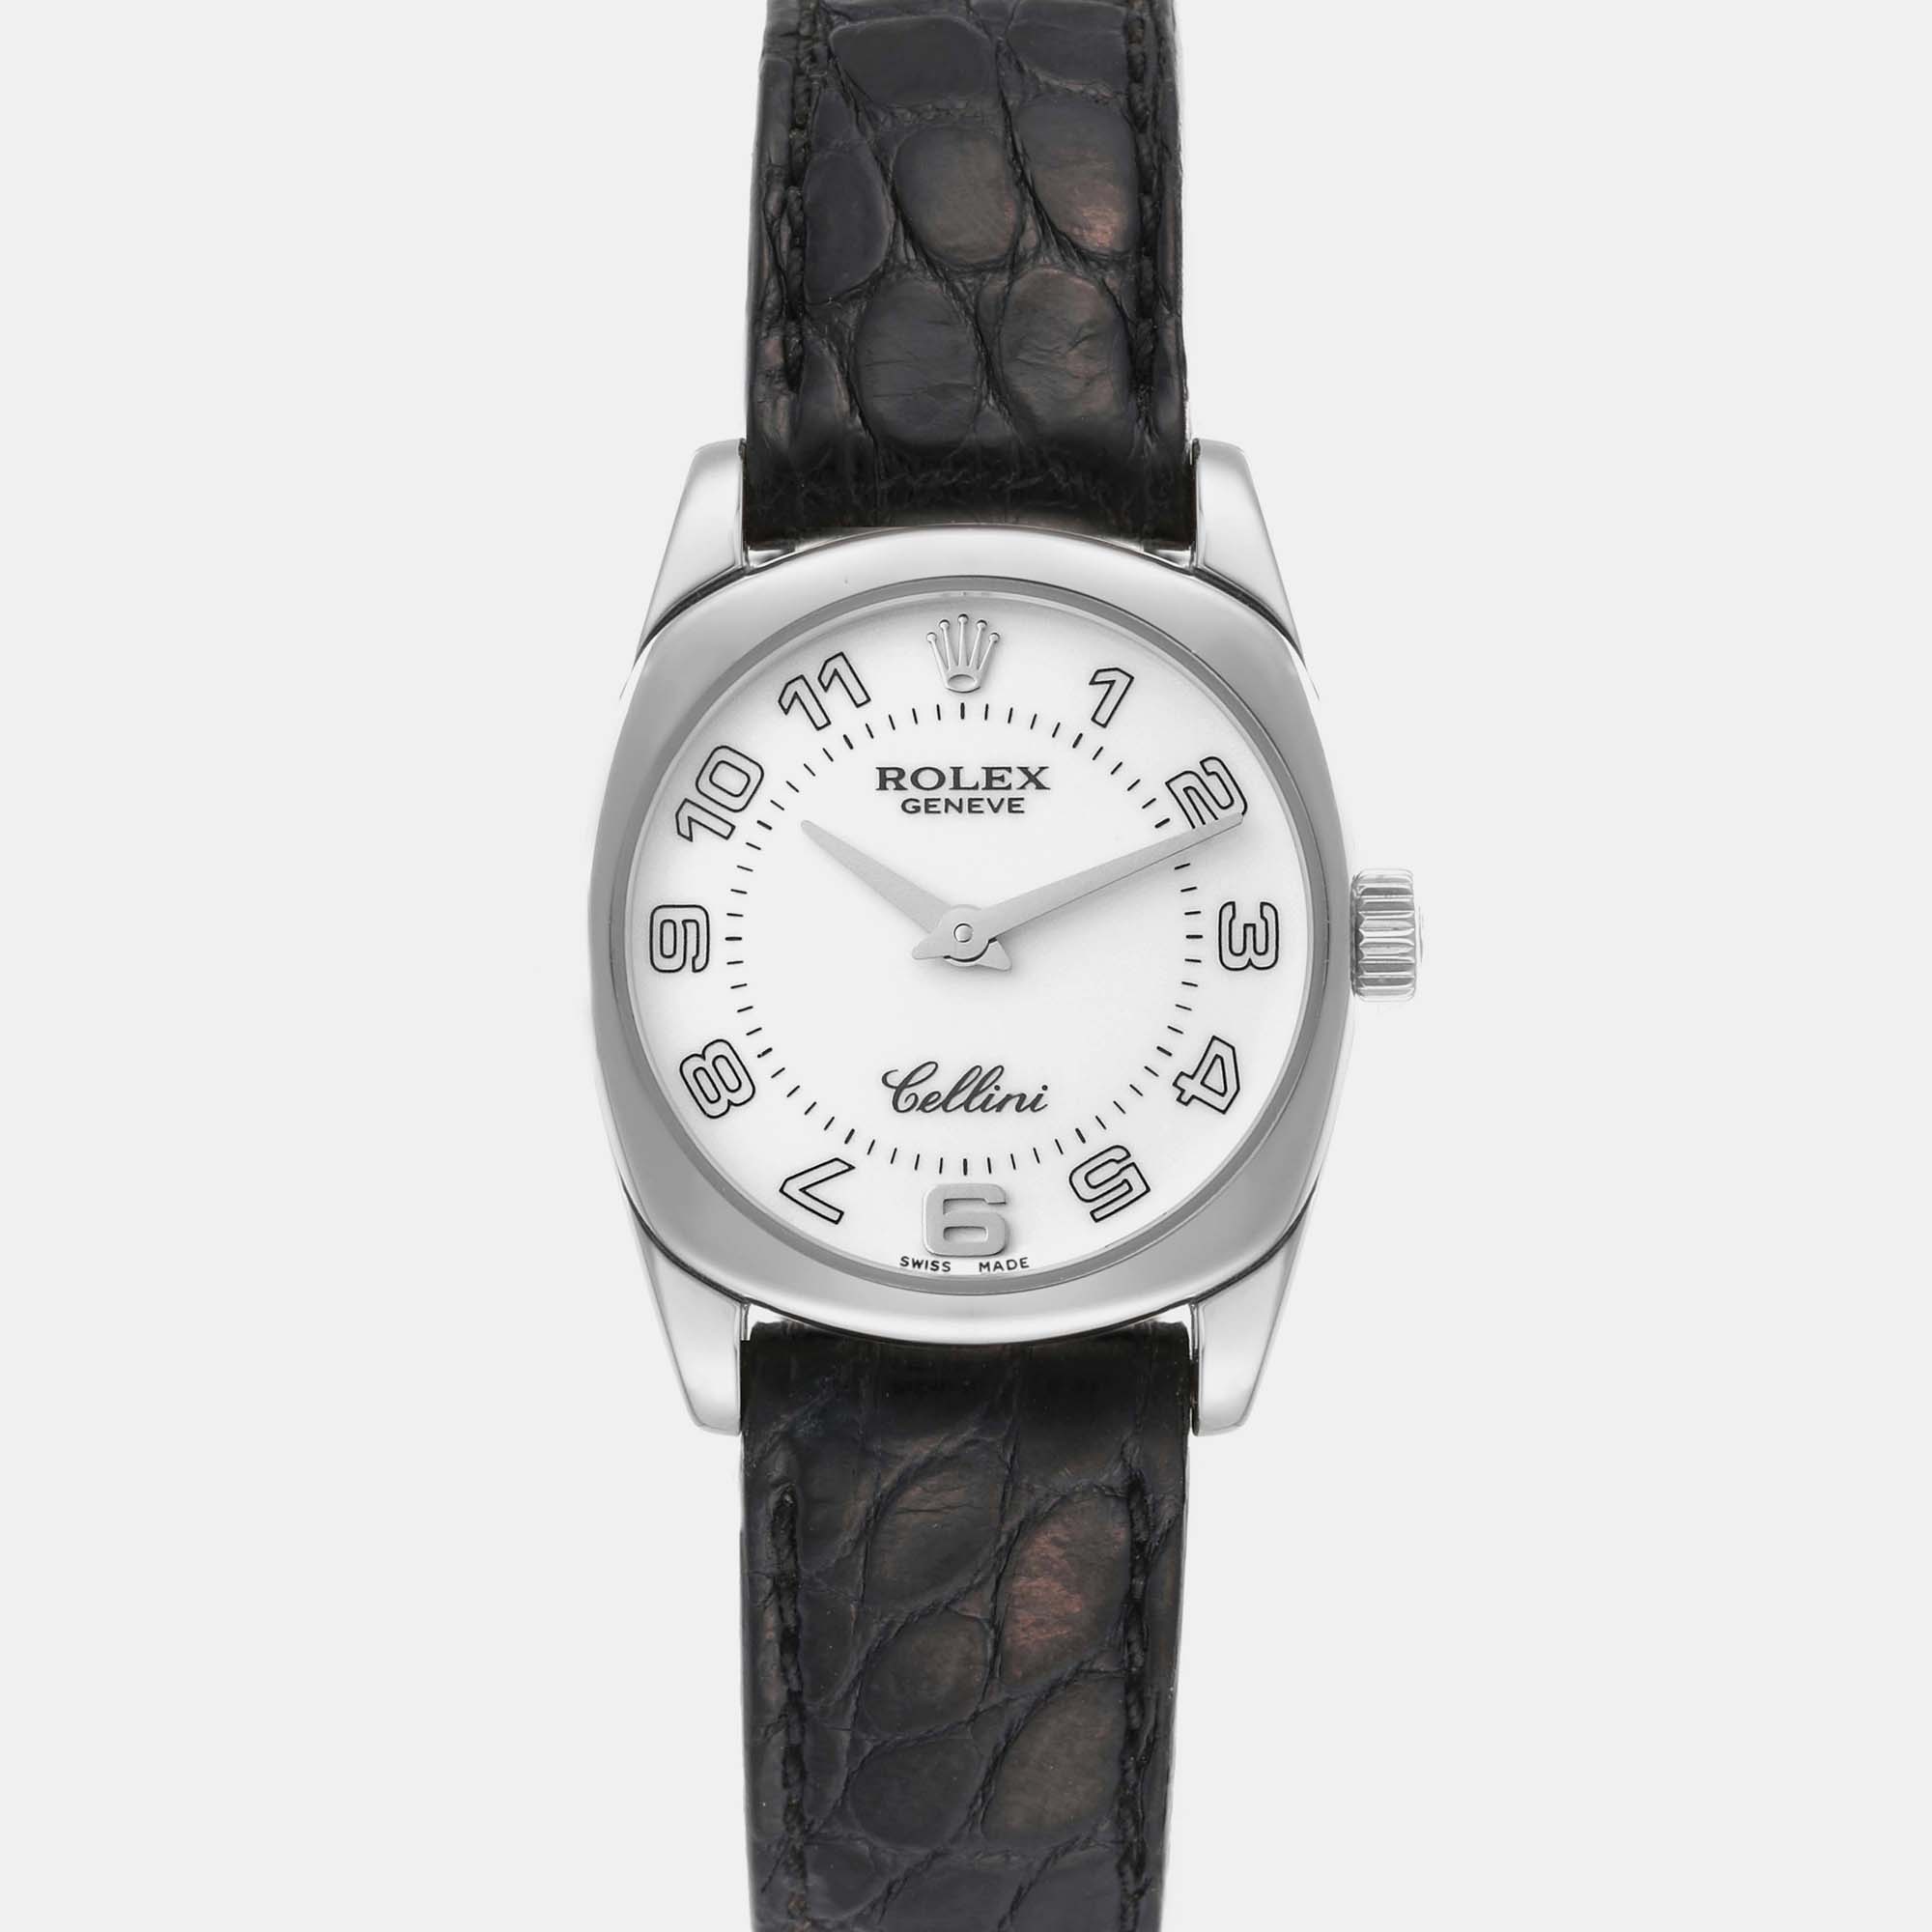 Rolex Cellini Danaos White Gold Black Strap Ladies Watch 6229 26.5 Mm